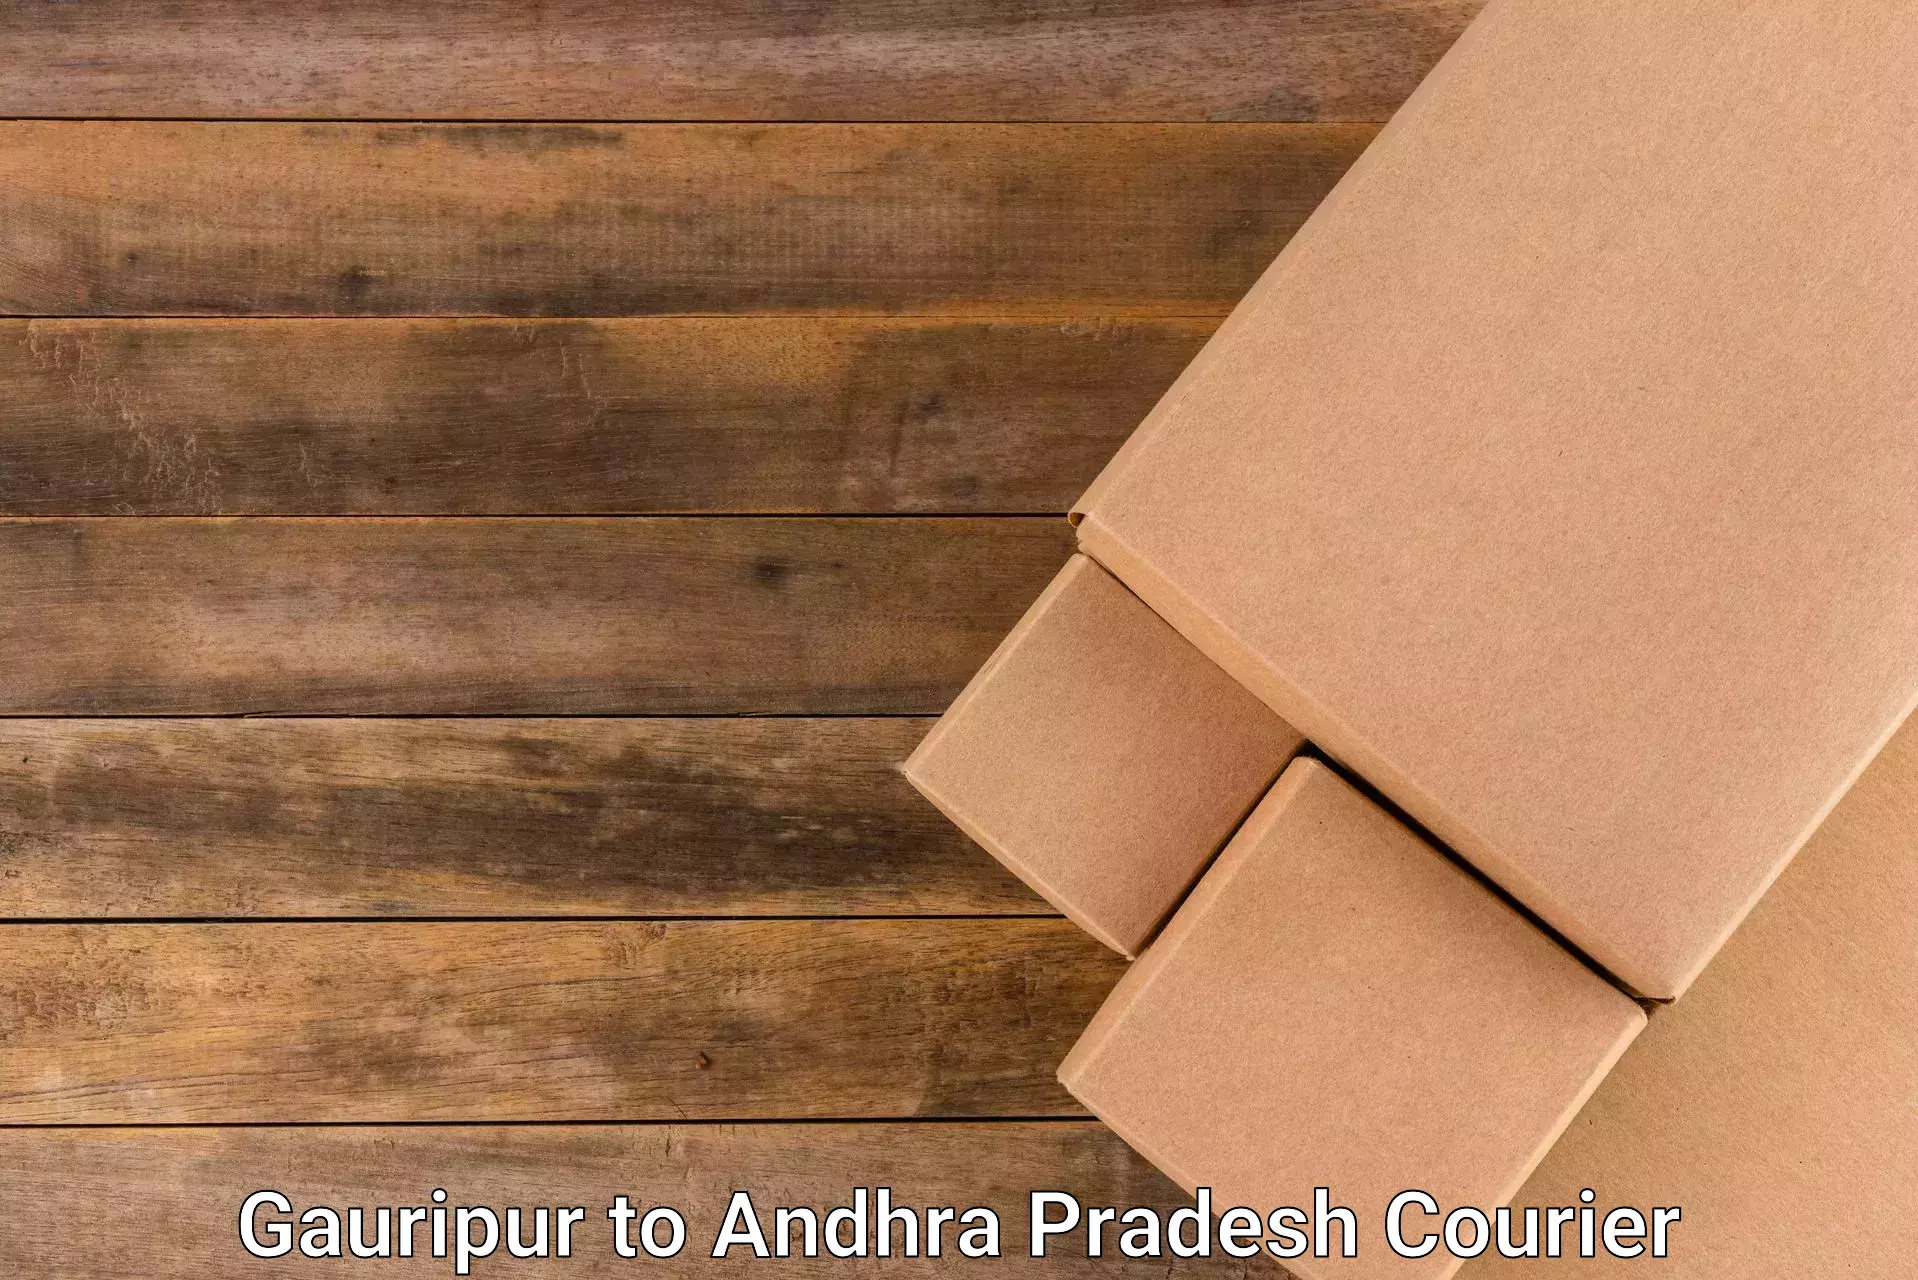 Global logistics network Gauripur to Andhra Pradesh